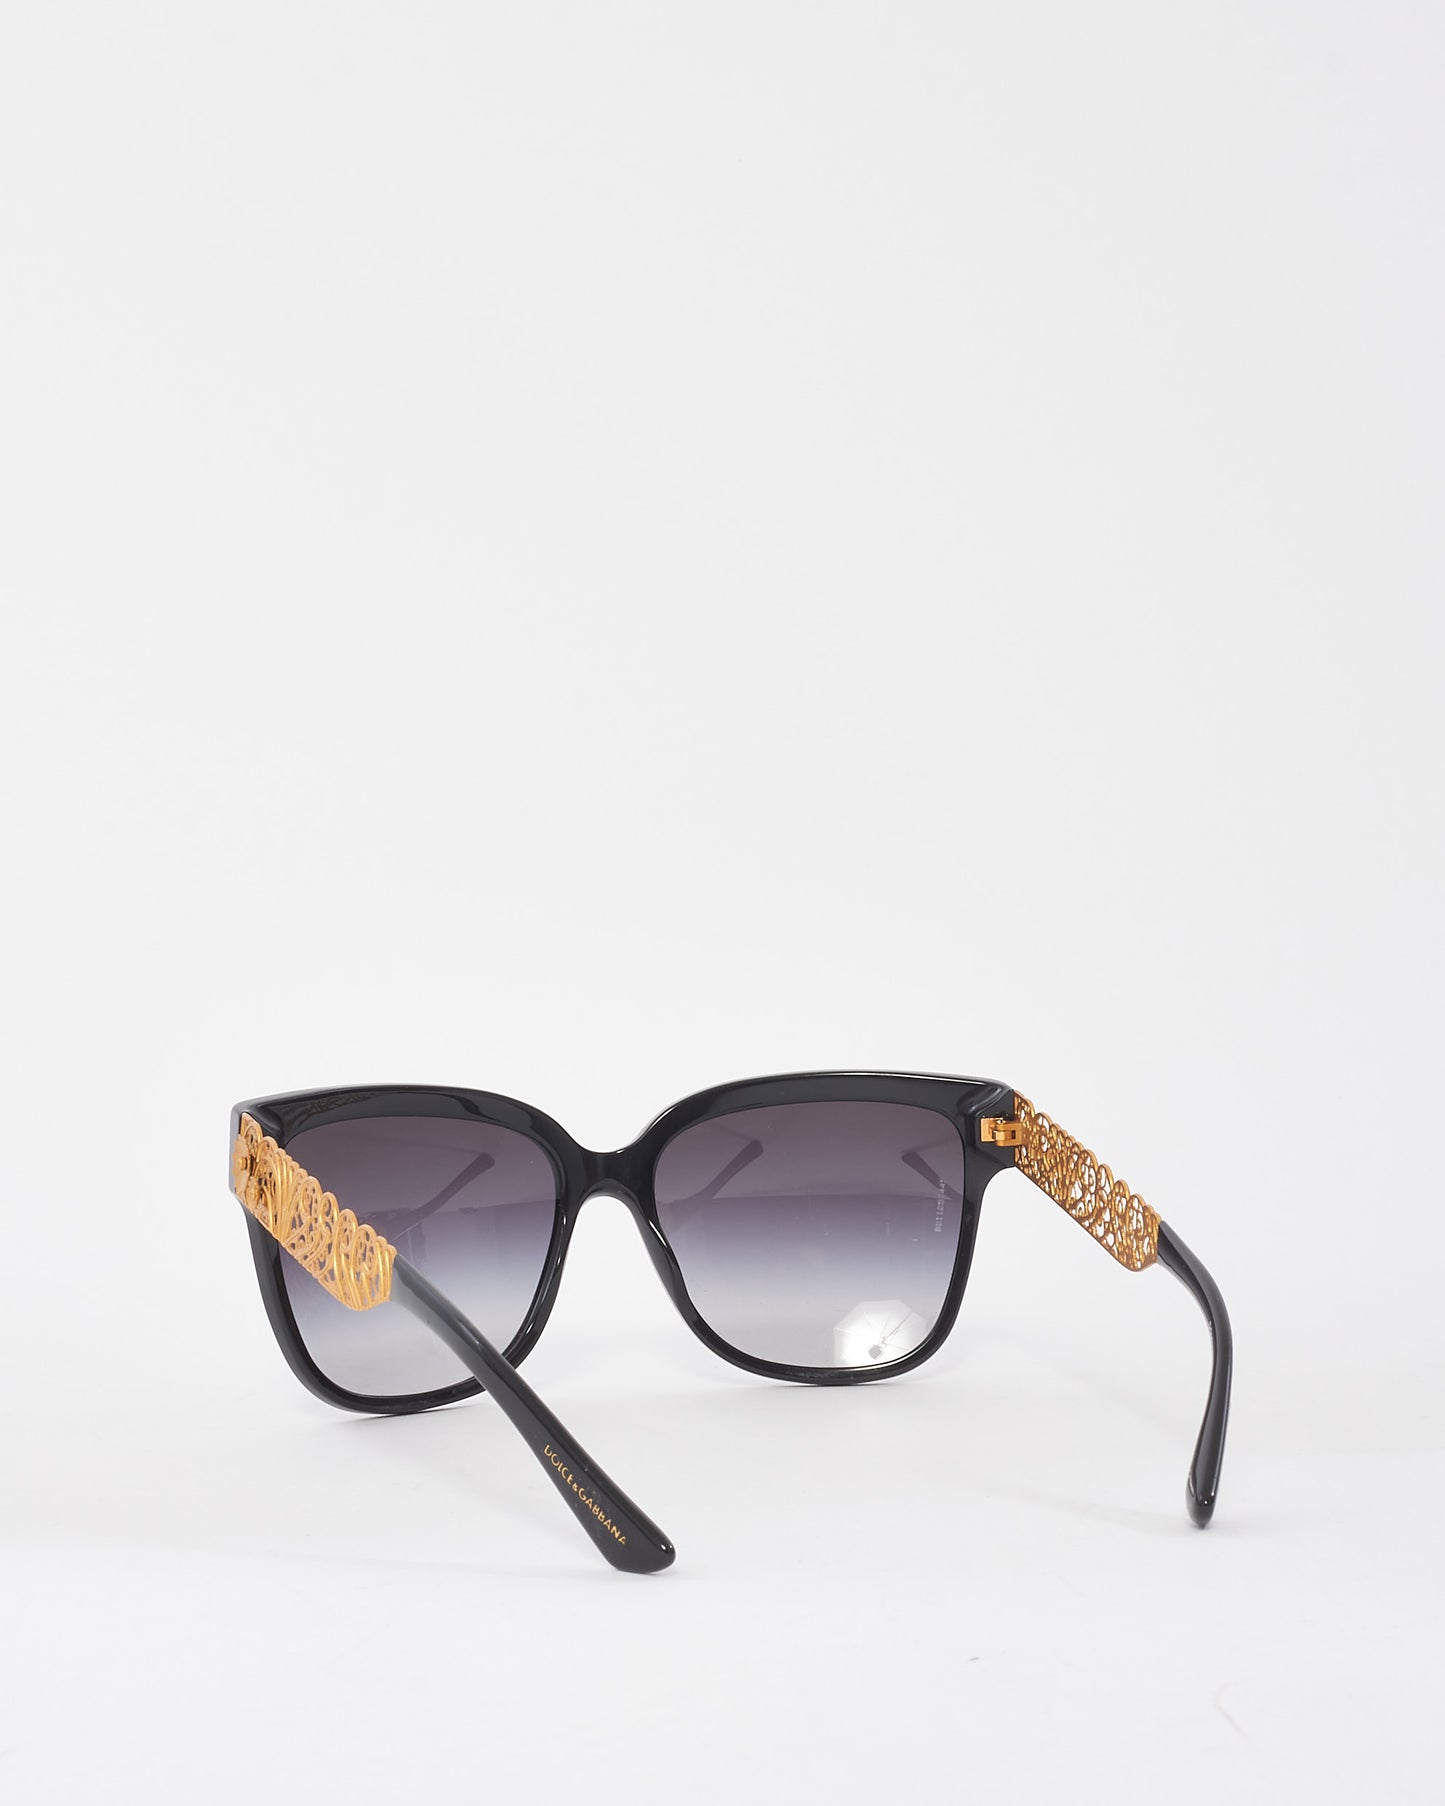 Dolce Gabbana Black & Gold Floral Sunglasses DG4212